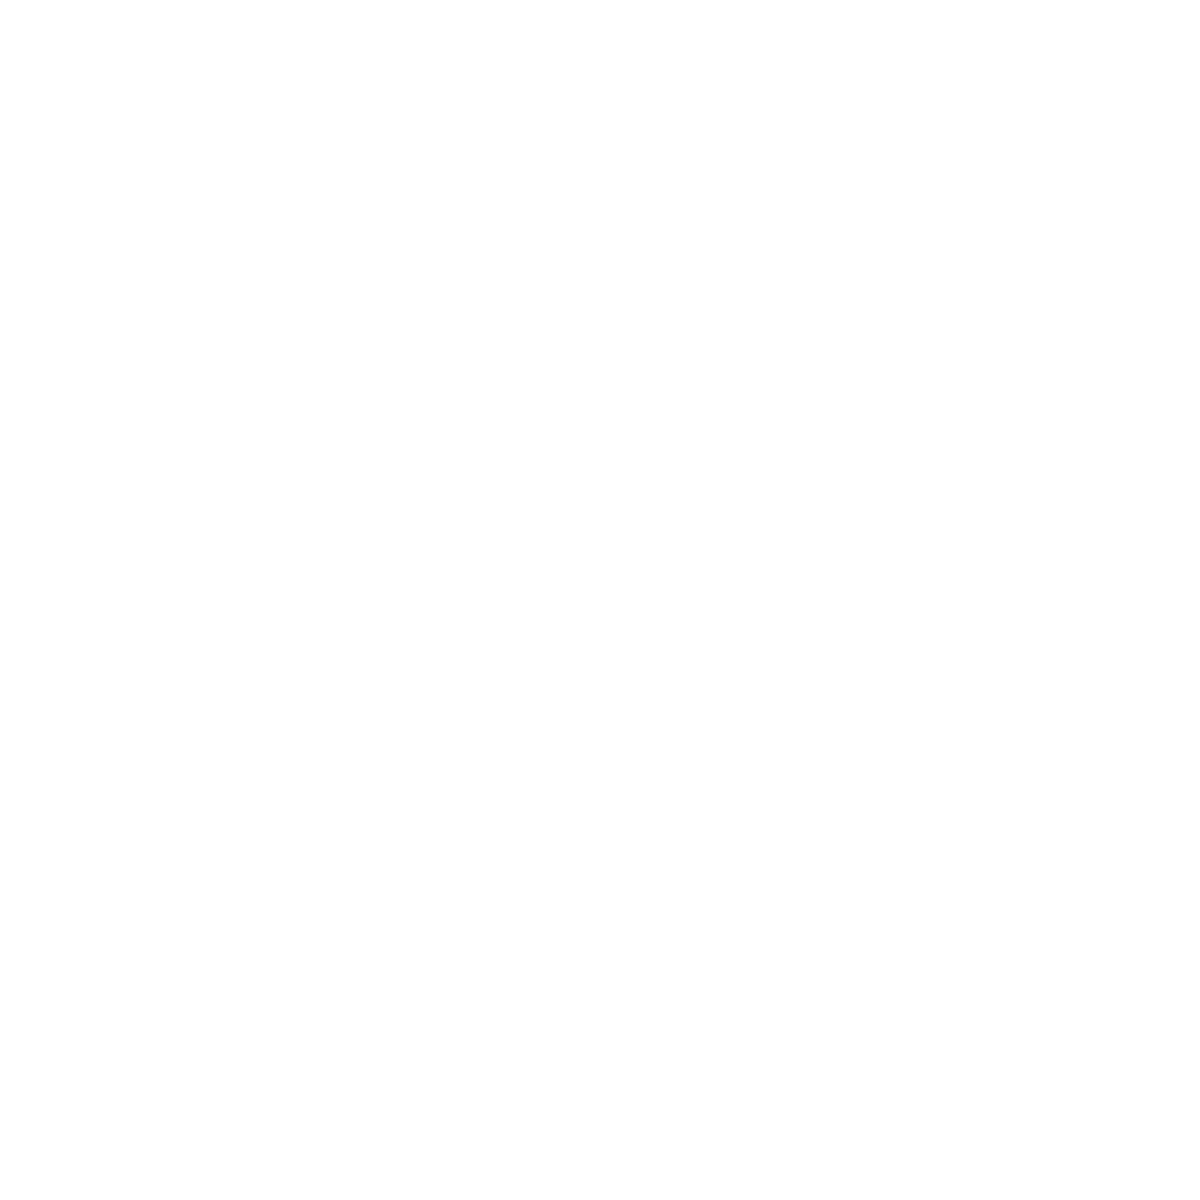 Cartoon Brew